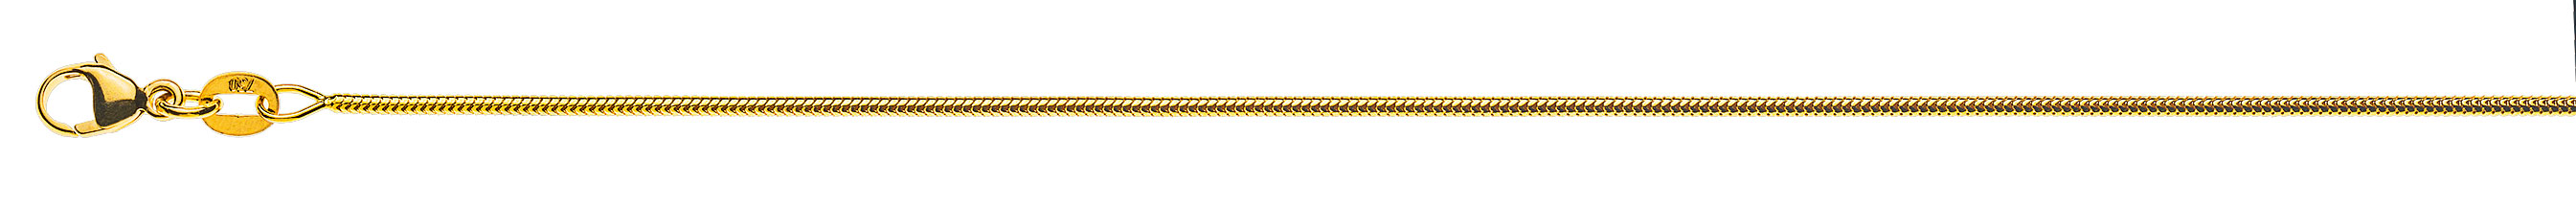 AURONOS Prestige Necklace yellow gold 18K snake chain 40cm 1.2mm